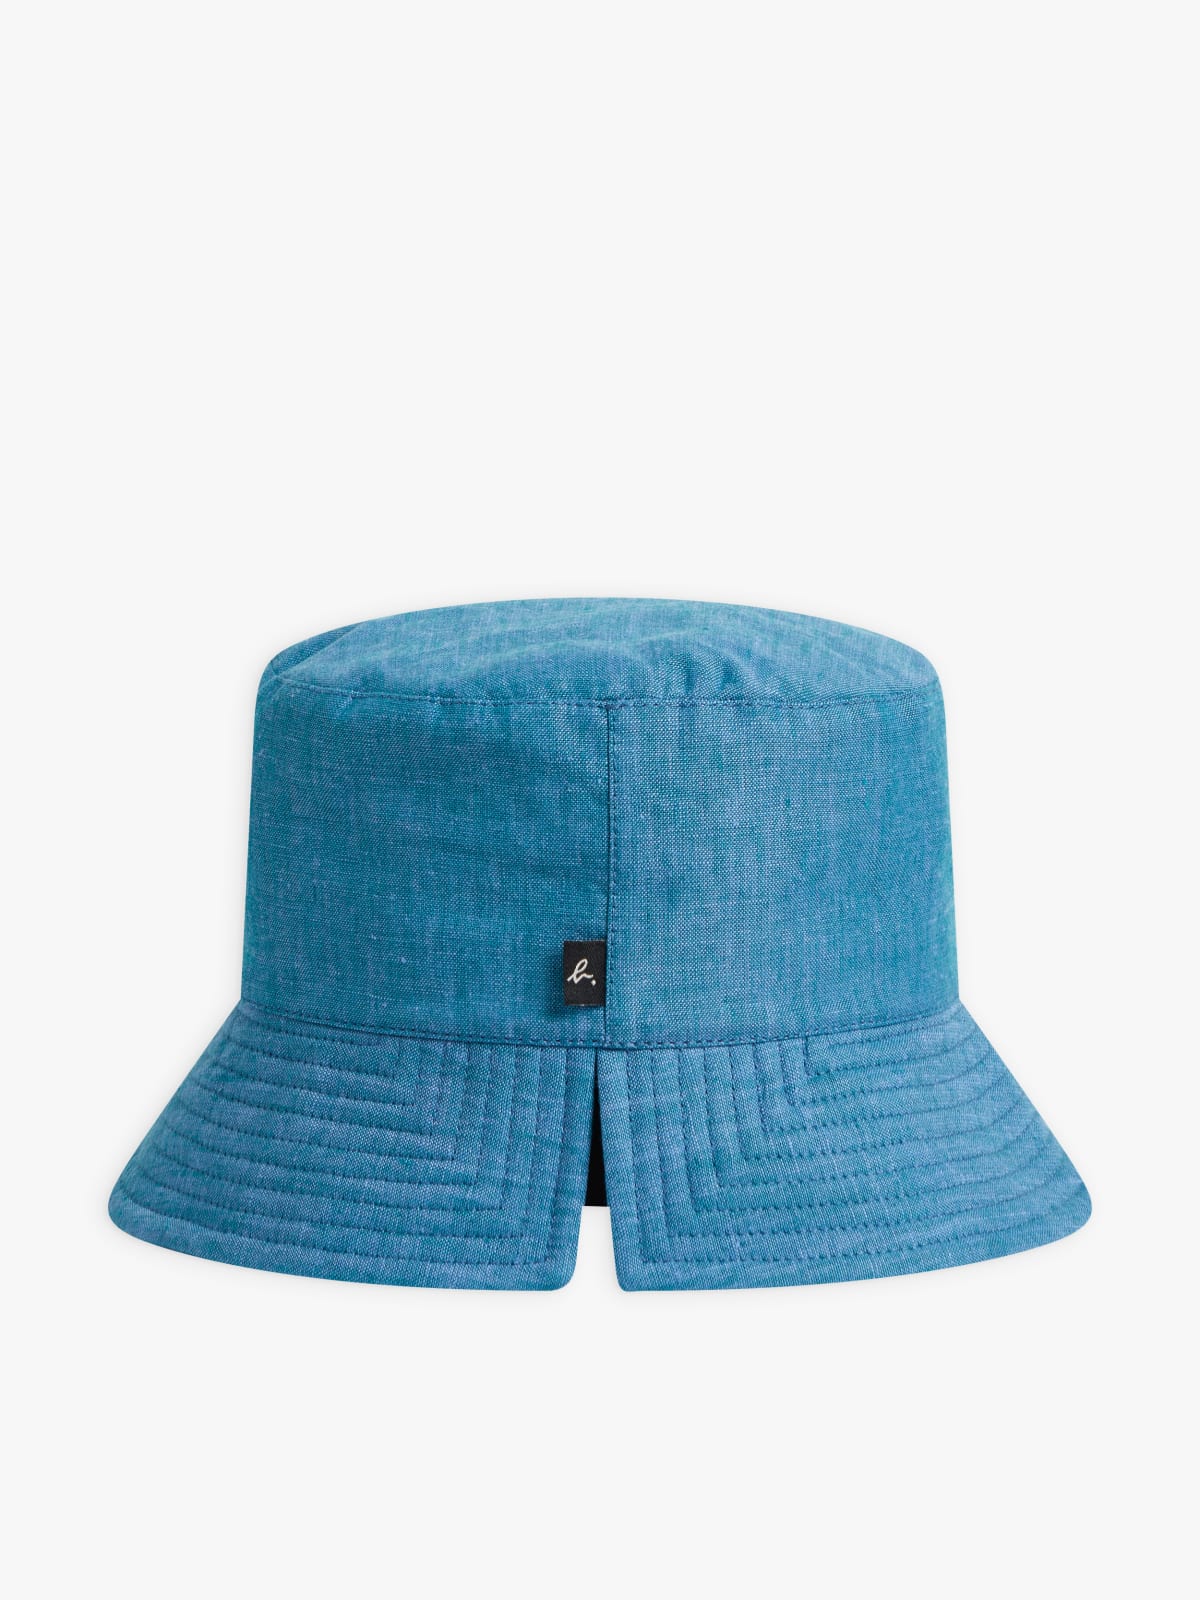 Fente linen Bucket hat